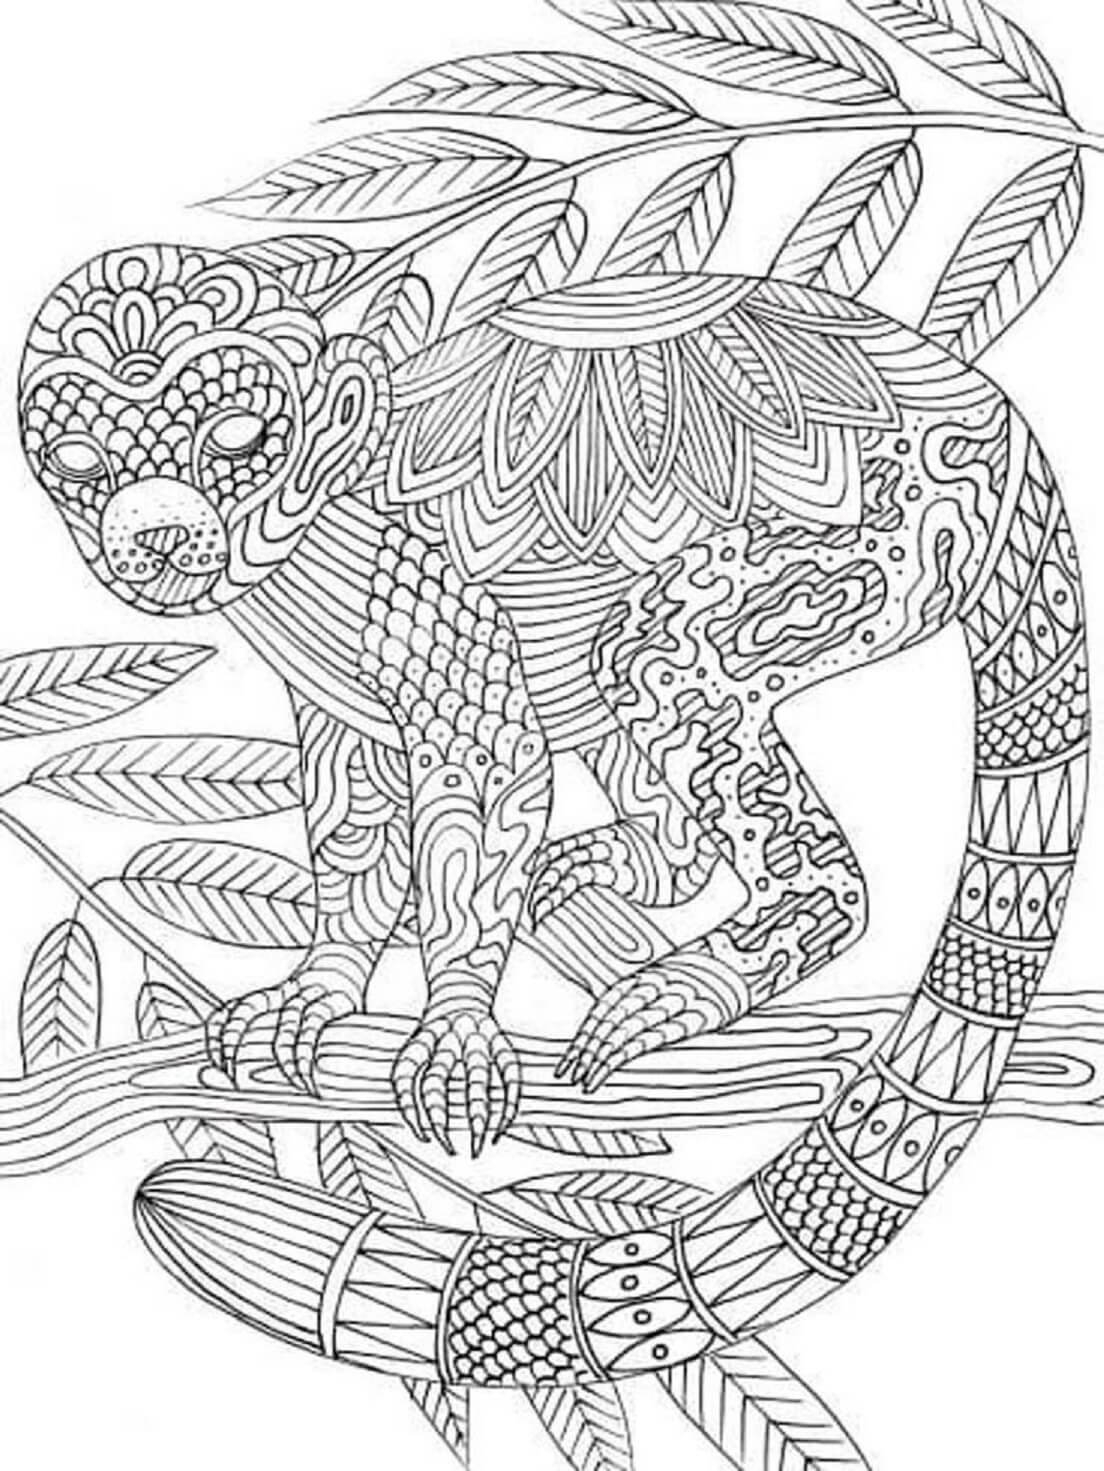 Mandala Monkey With Leaves Coloring Page Mandalas